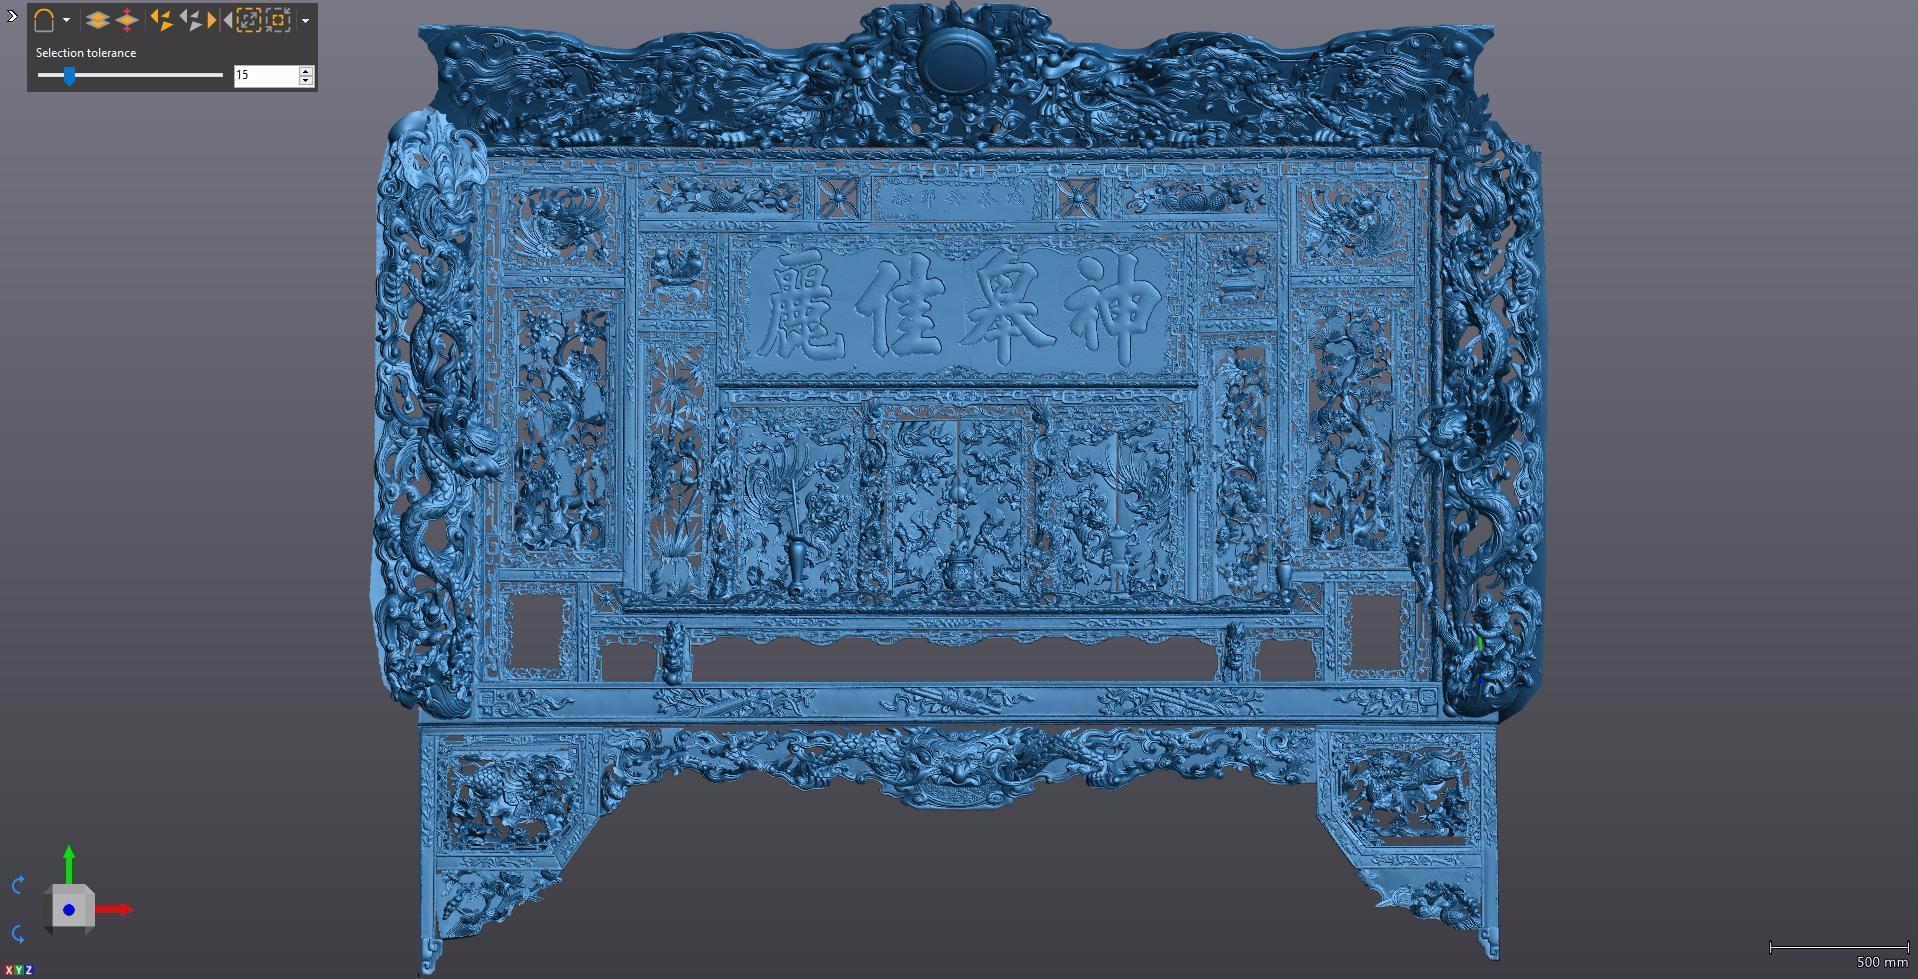 Scan 3D sharp artifact of Co Loa - Dong Anh - Hanoi,